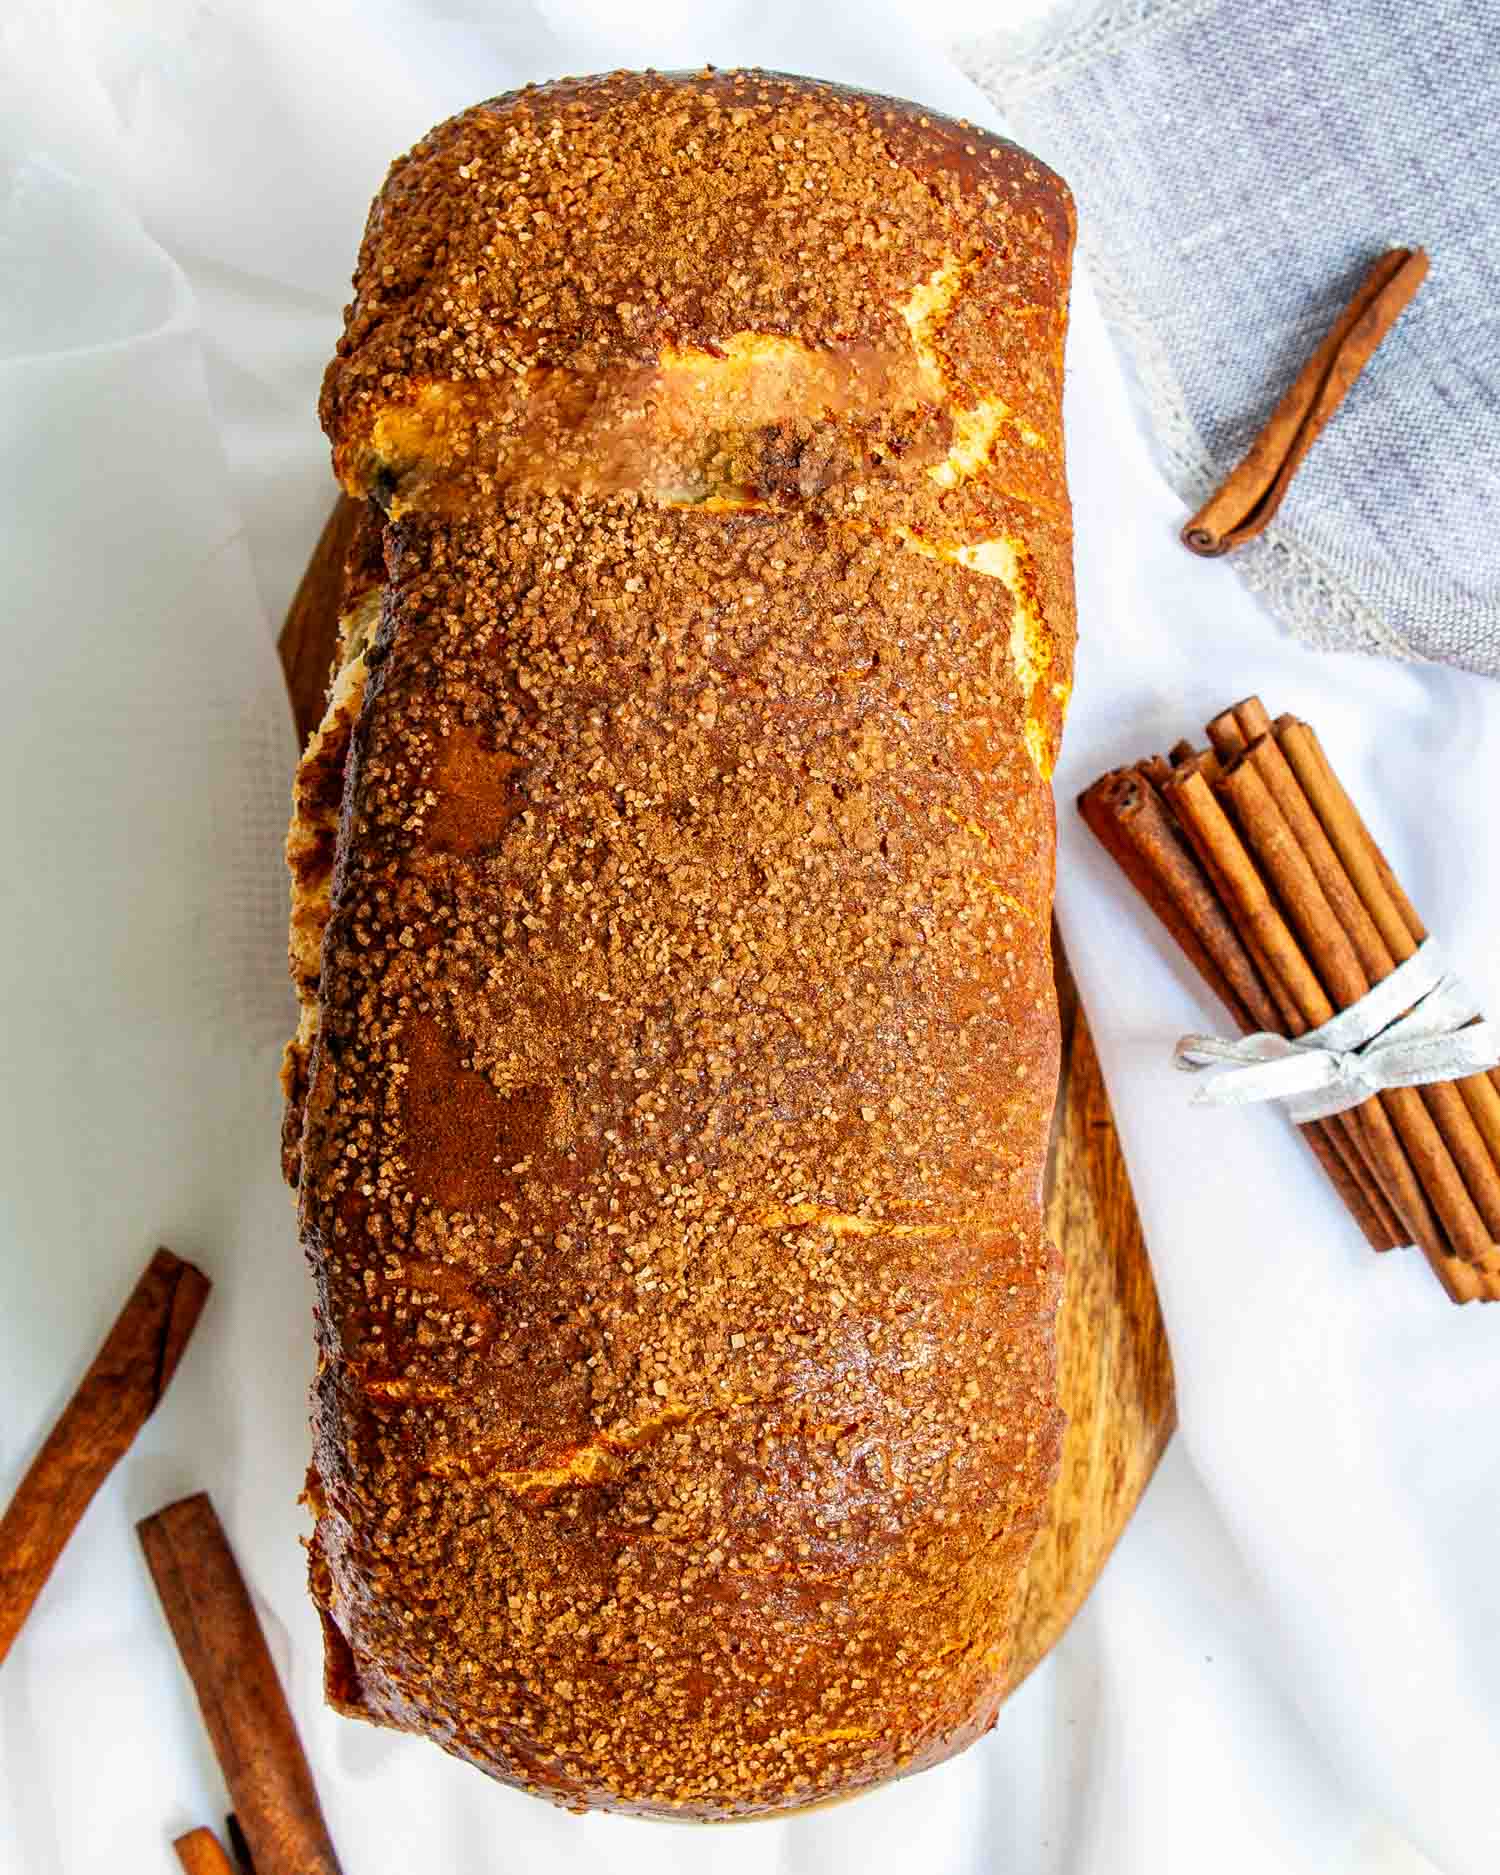 a freshly baked cinnamon bread along some cinnamon sticks.